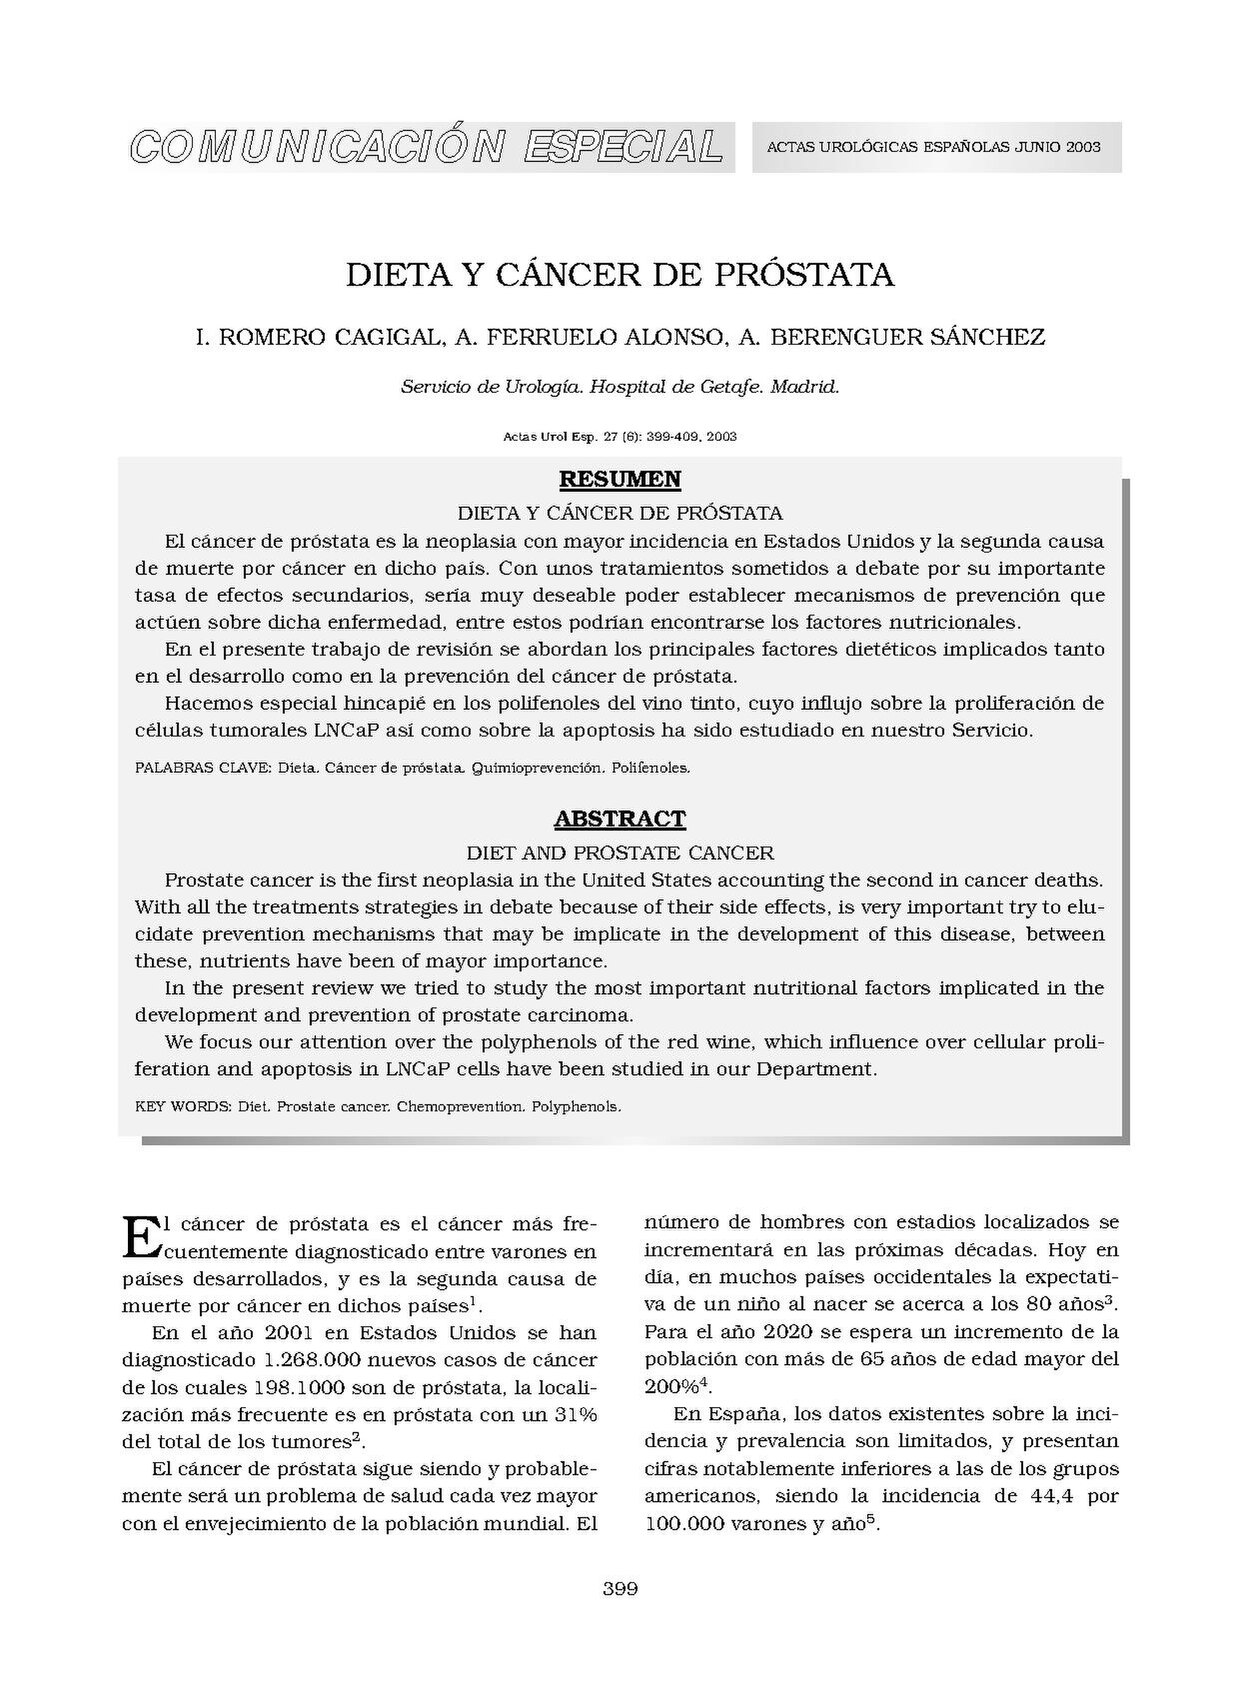 dieta prostata pdf uspstf prostate cancer screening, 2008